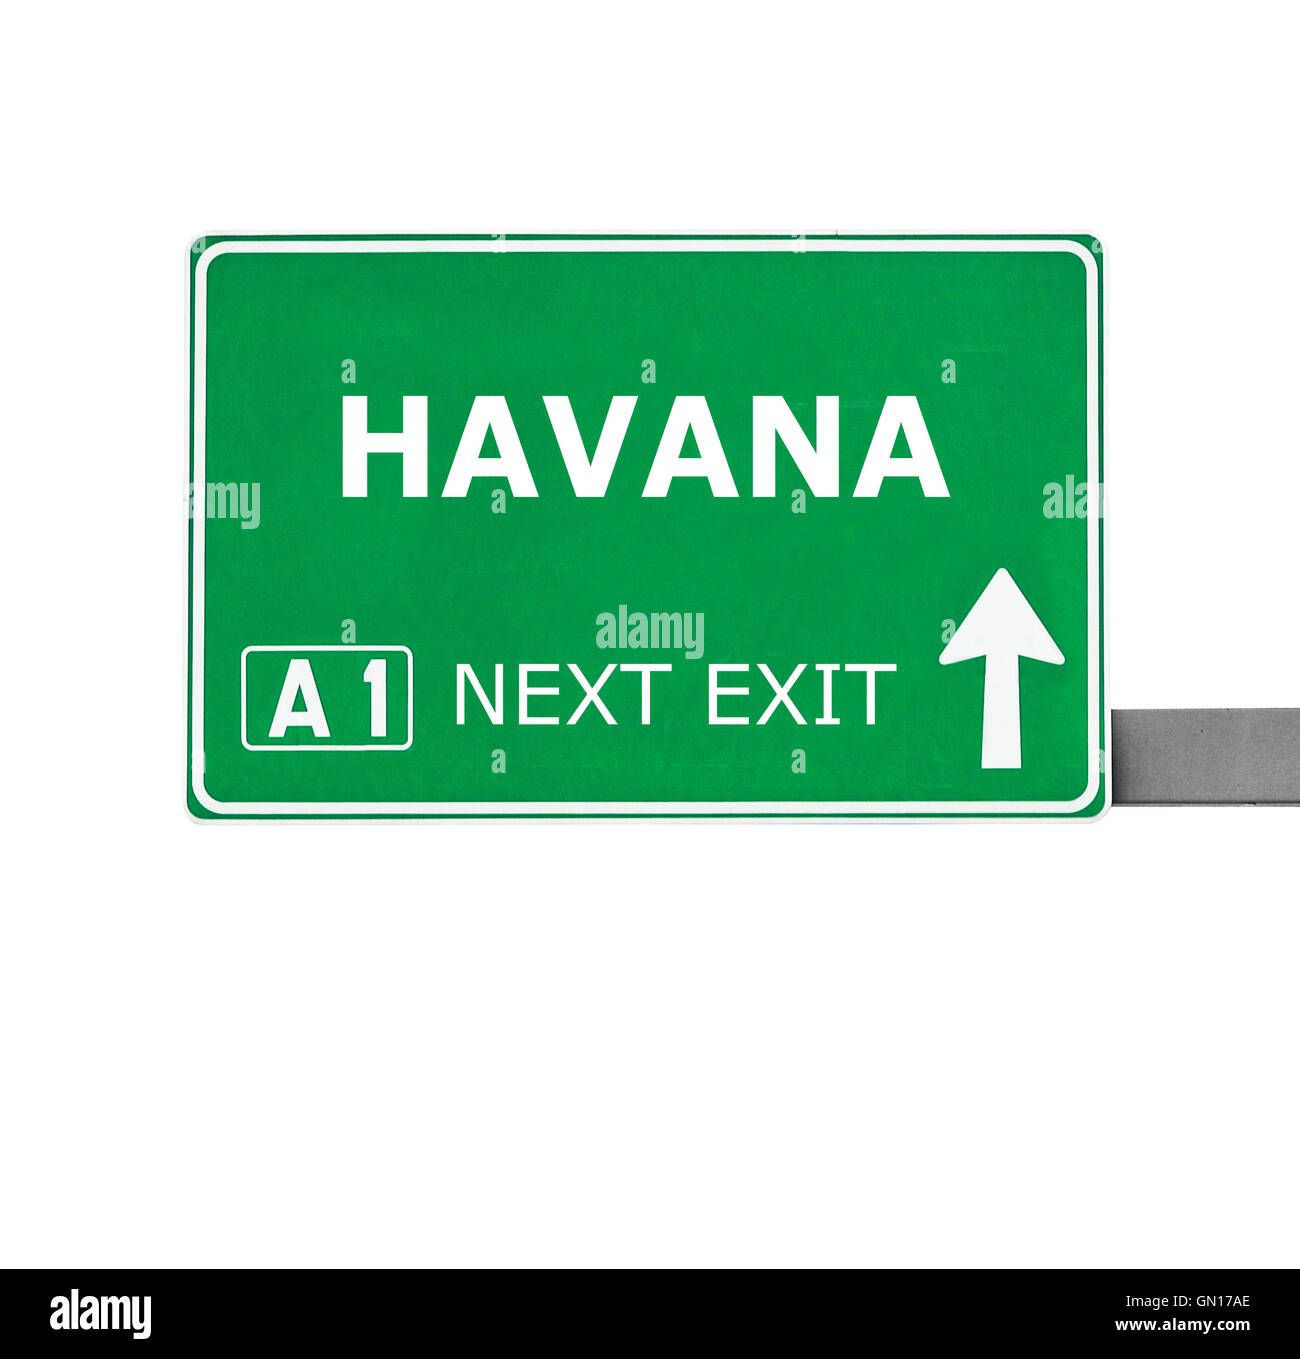 HAVANA road sign isolated on white Stock Photo